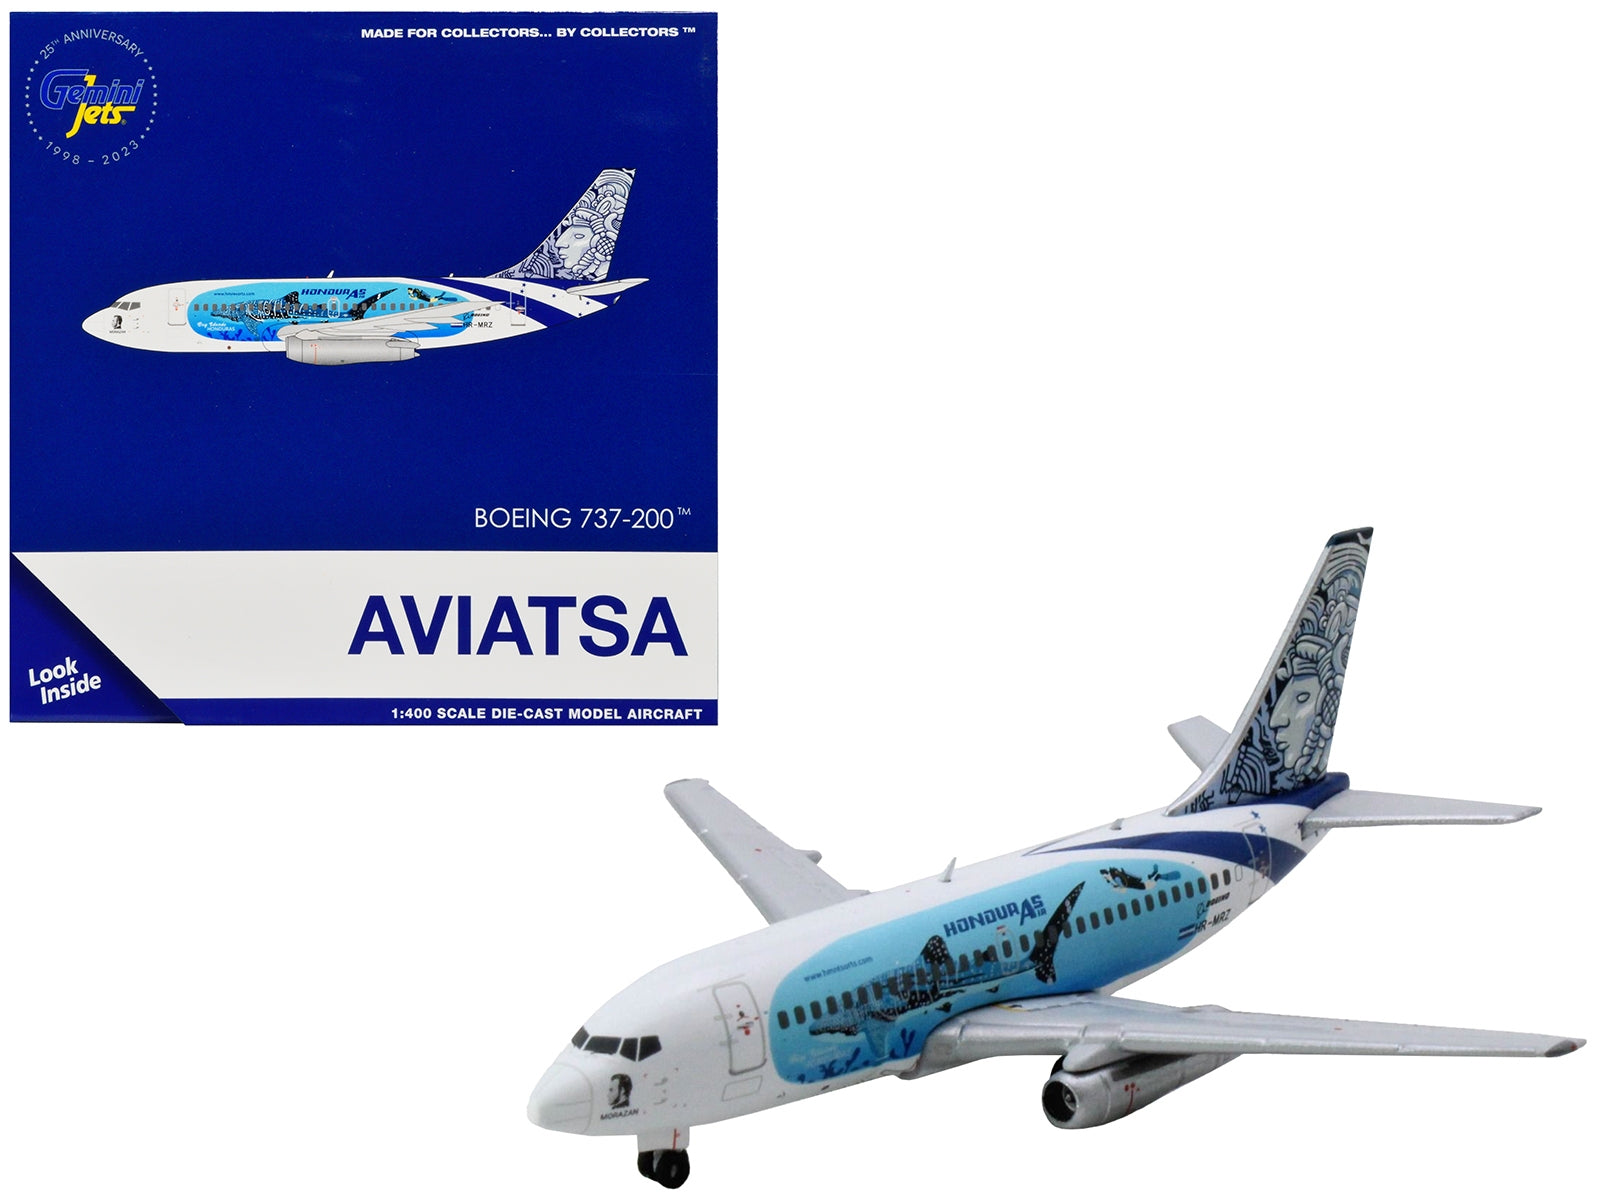 Boeing 737-200 Commercial Aircraft "Aviatsa Honduras" (HR-MRZ) White with Blue Graphics 1/400 Diecast Model Airplane by GeminiJets GeminiJets